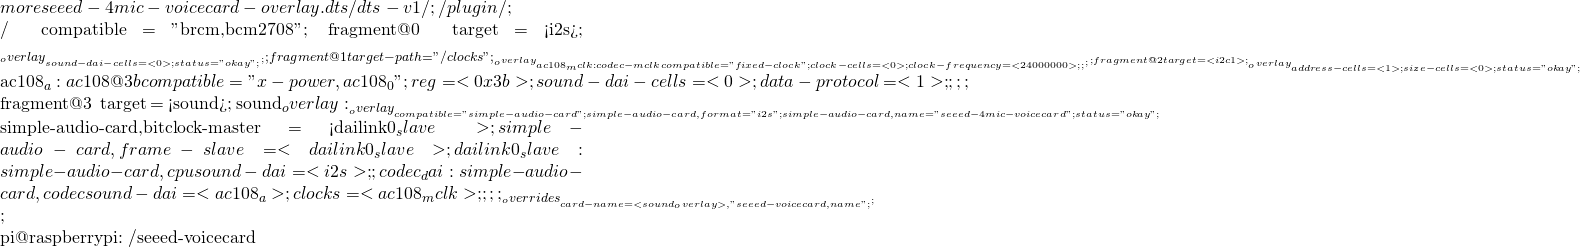 more seeed-4mic-voicecard-overlay.dts  /dts-v1/; /plugin/;  / {     compatible = "brcm,bcm2708"; 	fragment@0 { 		target = <&i2s>; 		__overlay__ { 			#sound-dai-cells = <0>; 			status = "okay";         	}; 	};     fragment@1 {         target-path = "/clocks";         __overlay__ {             ac108_mclk: codec-mclk {                 compatible = "fixed-clock";                 #clock-cells = <0>;                 clock-frequency = <24000000>;             };           };     };     fragment@2 { 		target = <&i2c1>; 		__overlay__ { 			#address-cells = <1>; 			#size-cells = <0>; 			status = "okay";  			ac108_a: ac108@3b{ 				compatible = "x-power,ac108_0"; 				reg = <0x3b>; 				#sound-dai-cells = <0>;                 data-protocol = <1>; 			}; 		};     };        fragment@3 {         target = <&sound>;         sound_overlay: __overlay__ {                 compatible = "simple-audio-card";                 simple-audio-card,format = "i2s";                 simple-audio-card,name = "seeed-4mic-voicecard";                  status = "okay";                                  simple-audio-card,bitclock-master = <&dailink0_slave>;                 simple-audio-card,frame-slave = <&dailink0_slave>;                                dailink0_slave: simple-audio-card,cpu {                     sound-dai = <&i2s>;                 };                 codec_dai: simple-audio-card,codec {                     sound-dai = <&ac108_a>;                     clocks =  <&ac108_mclk>;                 };         };     };     __overrides__ {         card-name = <&sound_overlay>,"seeed-voicecard,name";     };           };  pi@raspberrypi:~/seeed-voicecard